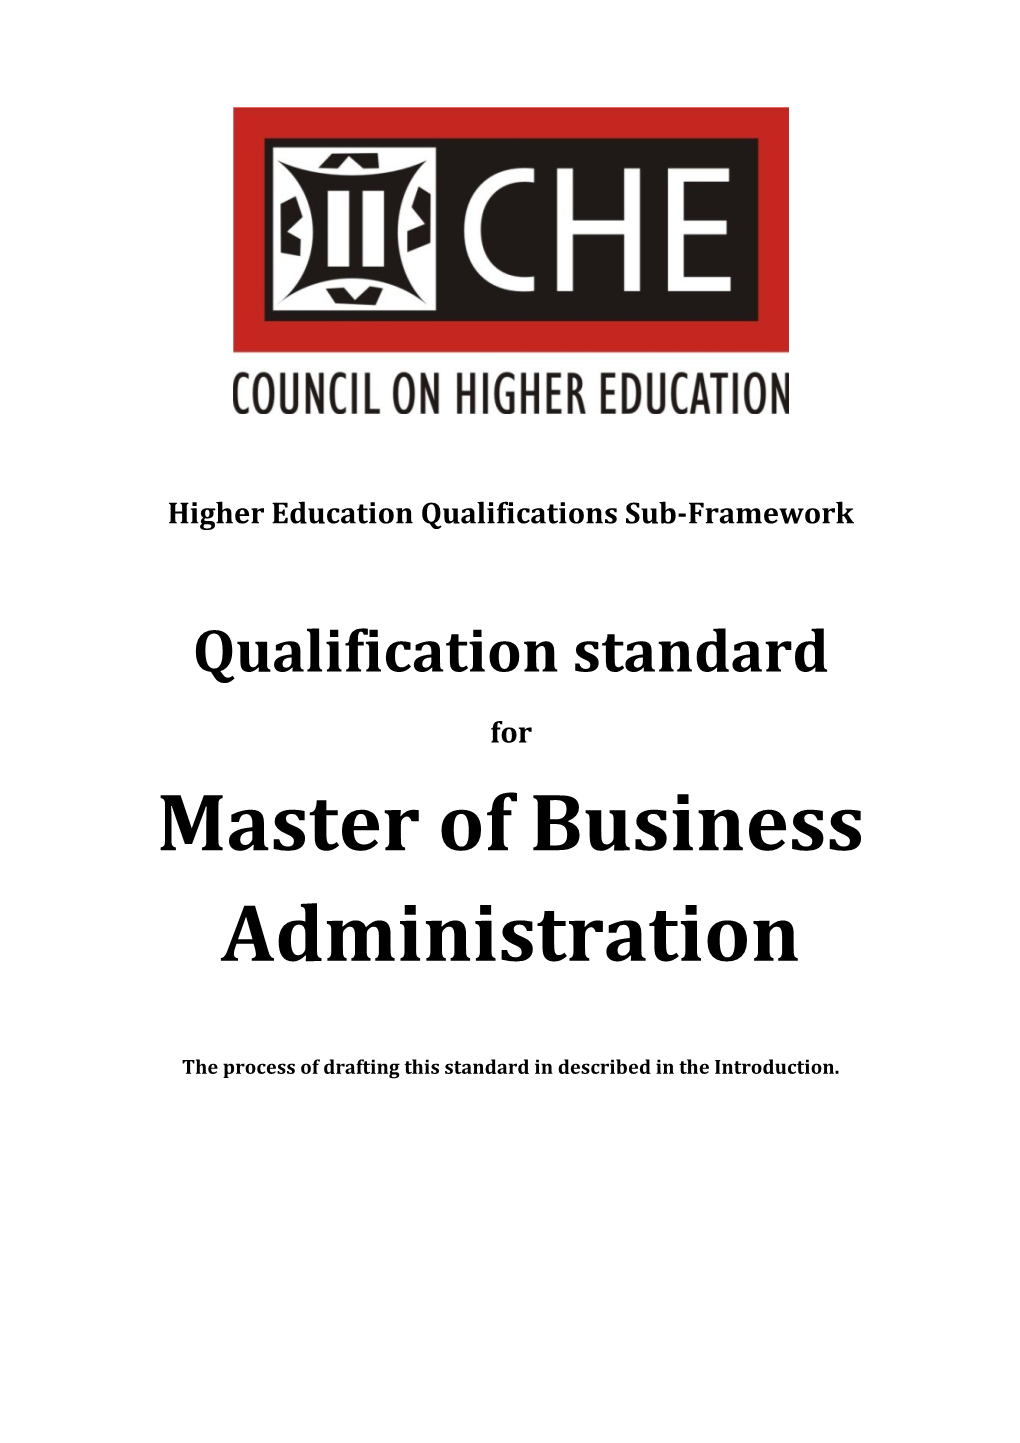 Higher Education Qualifications Sub-Framework